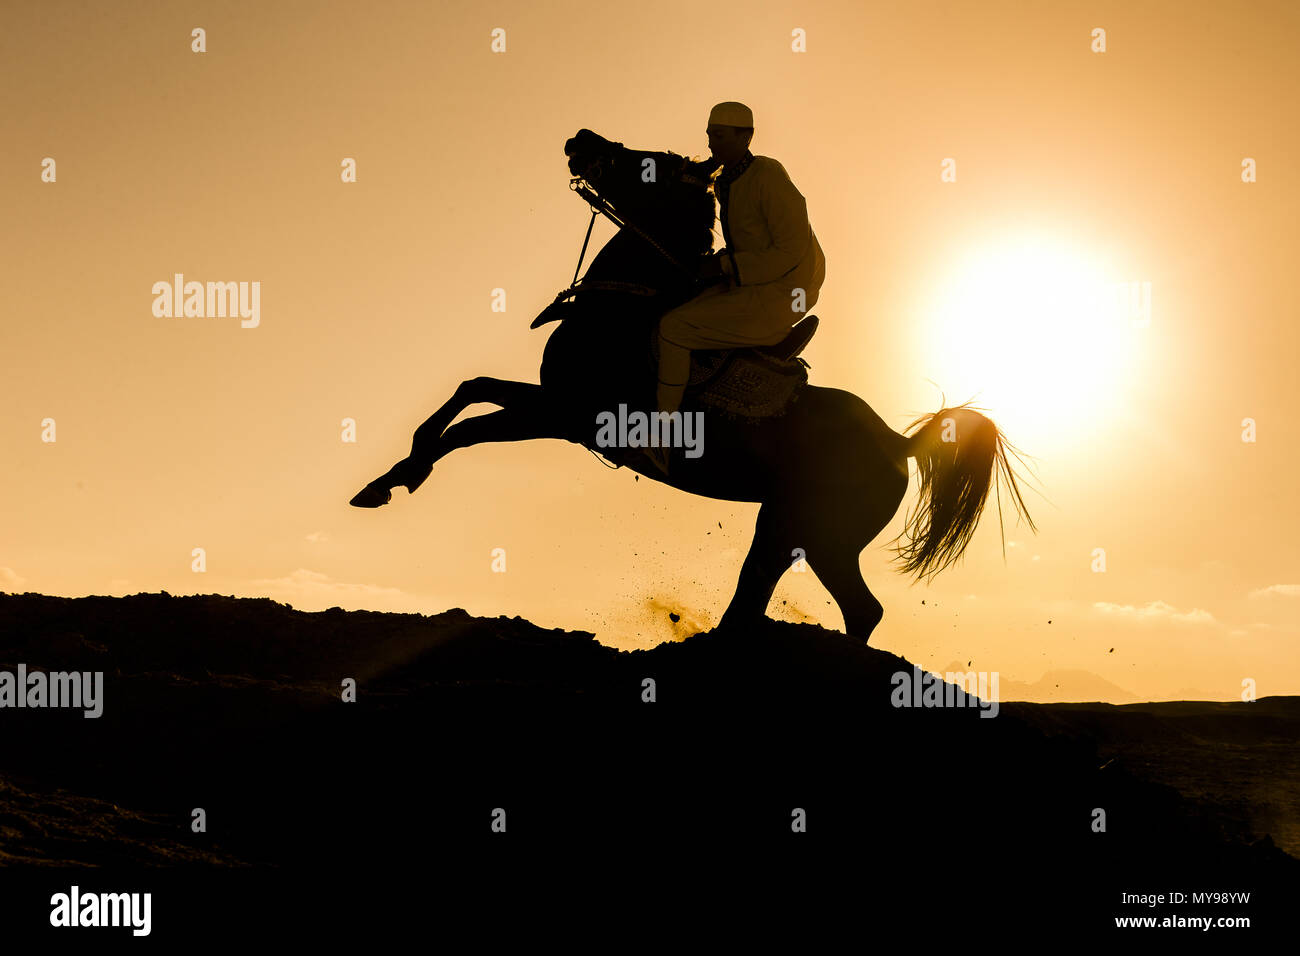 Arabian Horse. Rider on black stallion galloping in the desert, silhouetted against the setting sun. Egypt Stock Photo